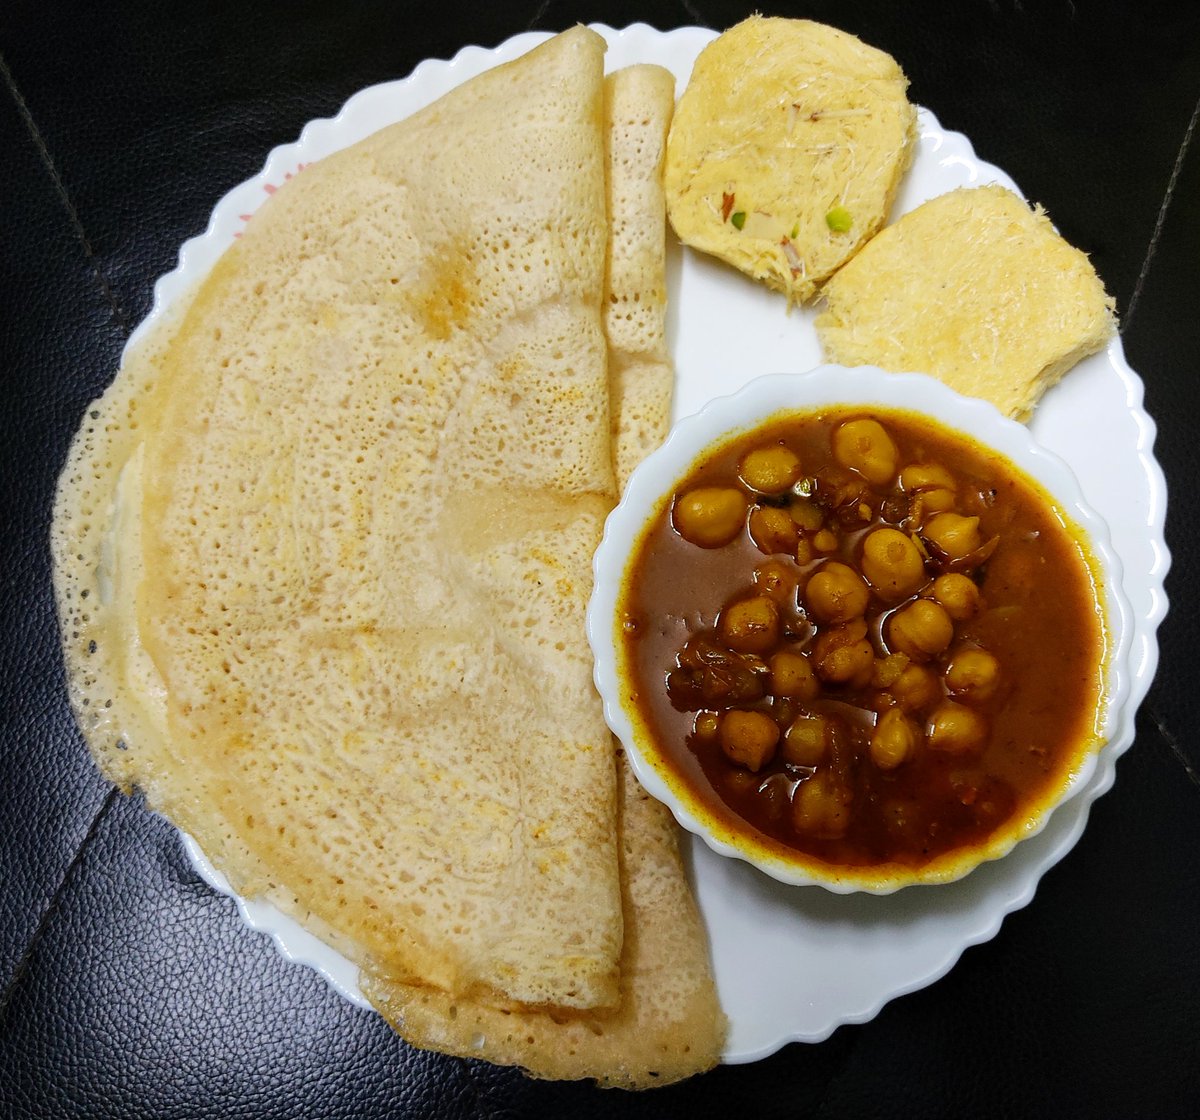 Dinner platter😊😍
#homemadedinner #dinnerplatter #foodtweeter #foodworld #kendujhargarh #odisha #india